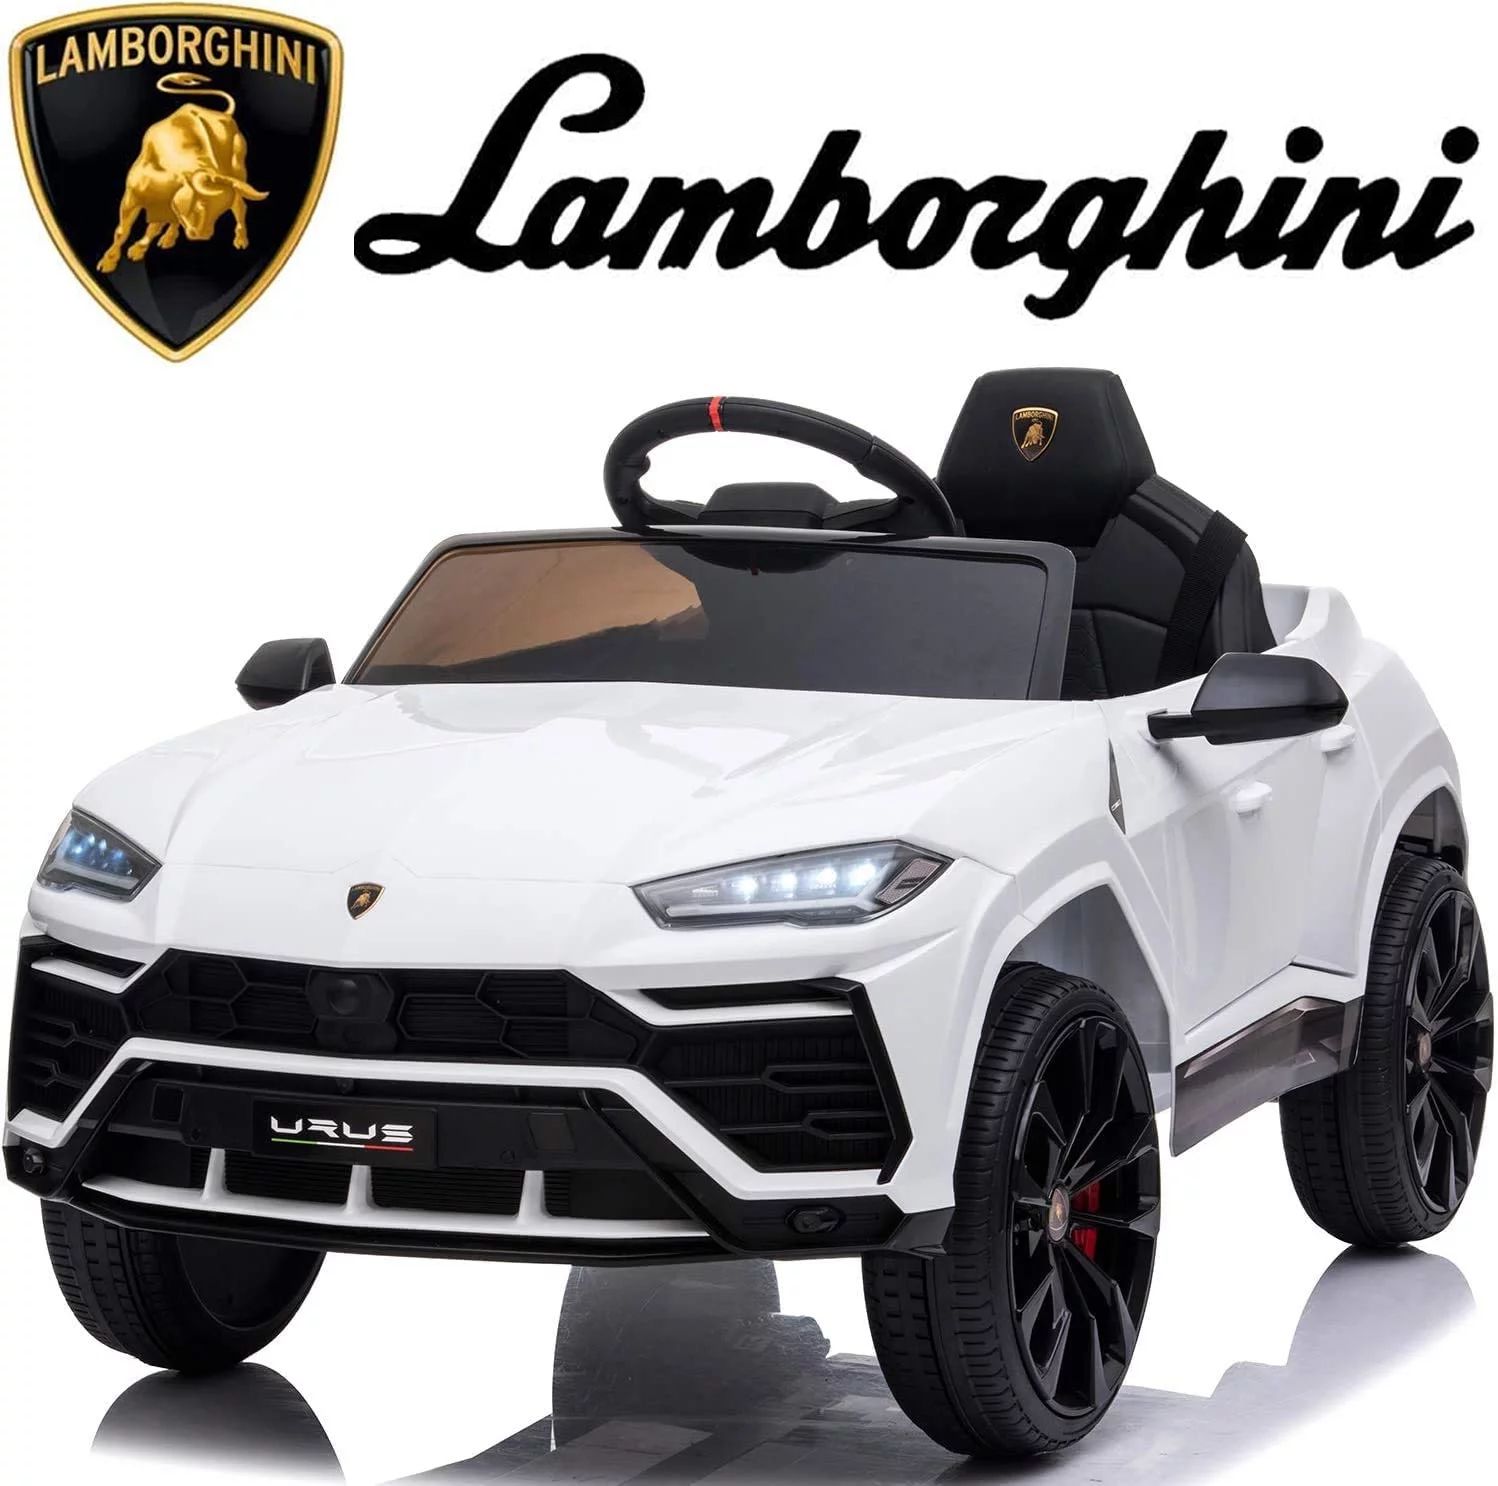 Lamborghini 12 V Powered Ride on Cars, Remote Control, Battery Powered, White | Walmart (US)